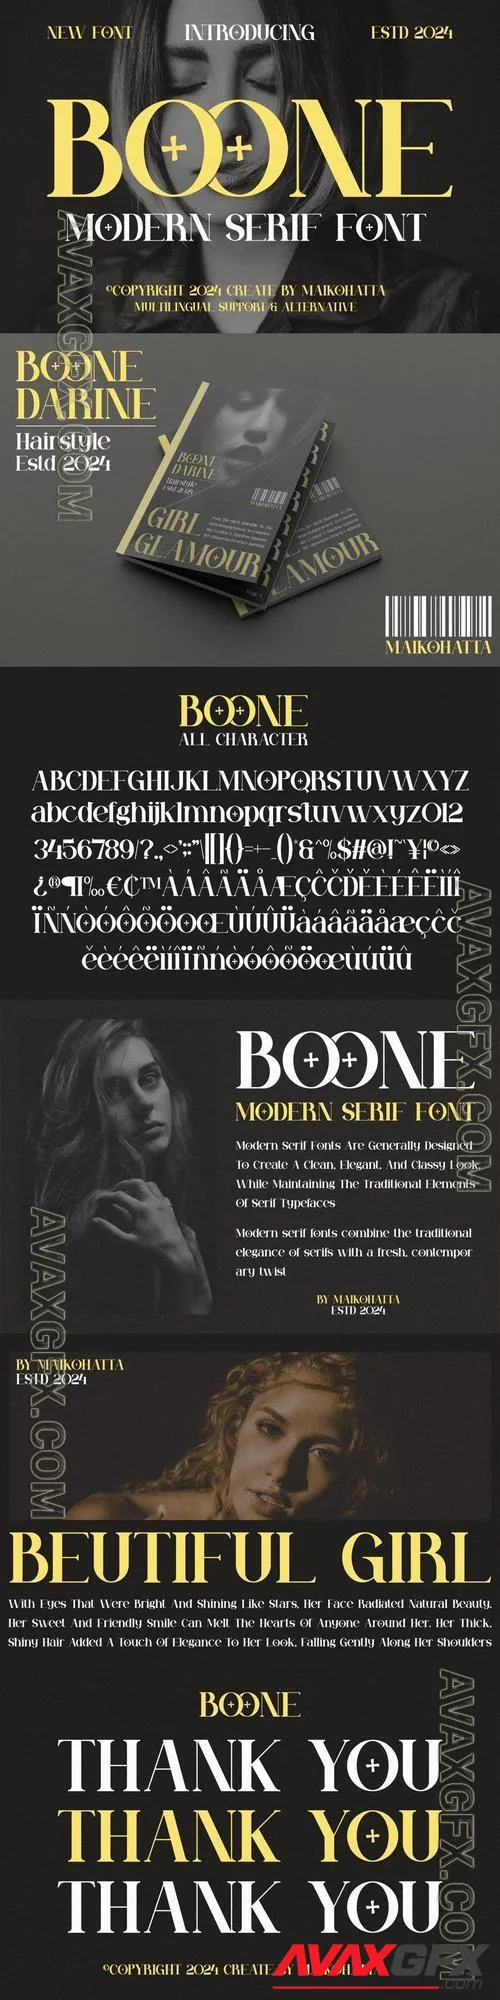 Boone - Modern Serif Font